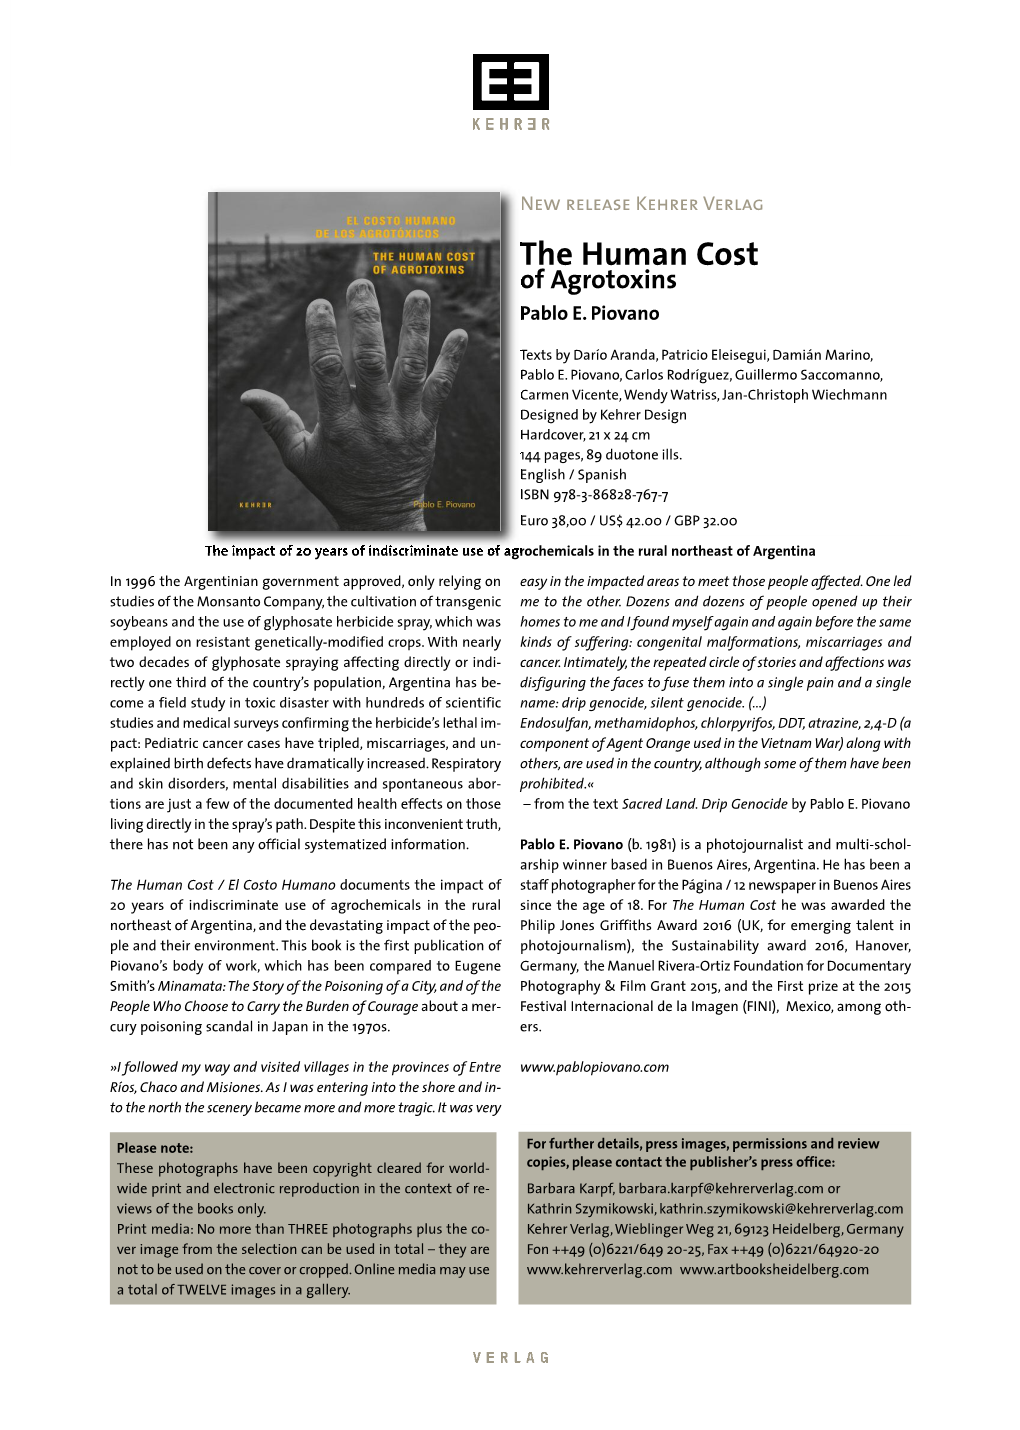 Press Kit Pablo E. Piovano the Human Cost Of